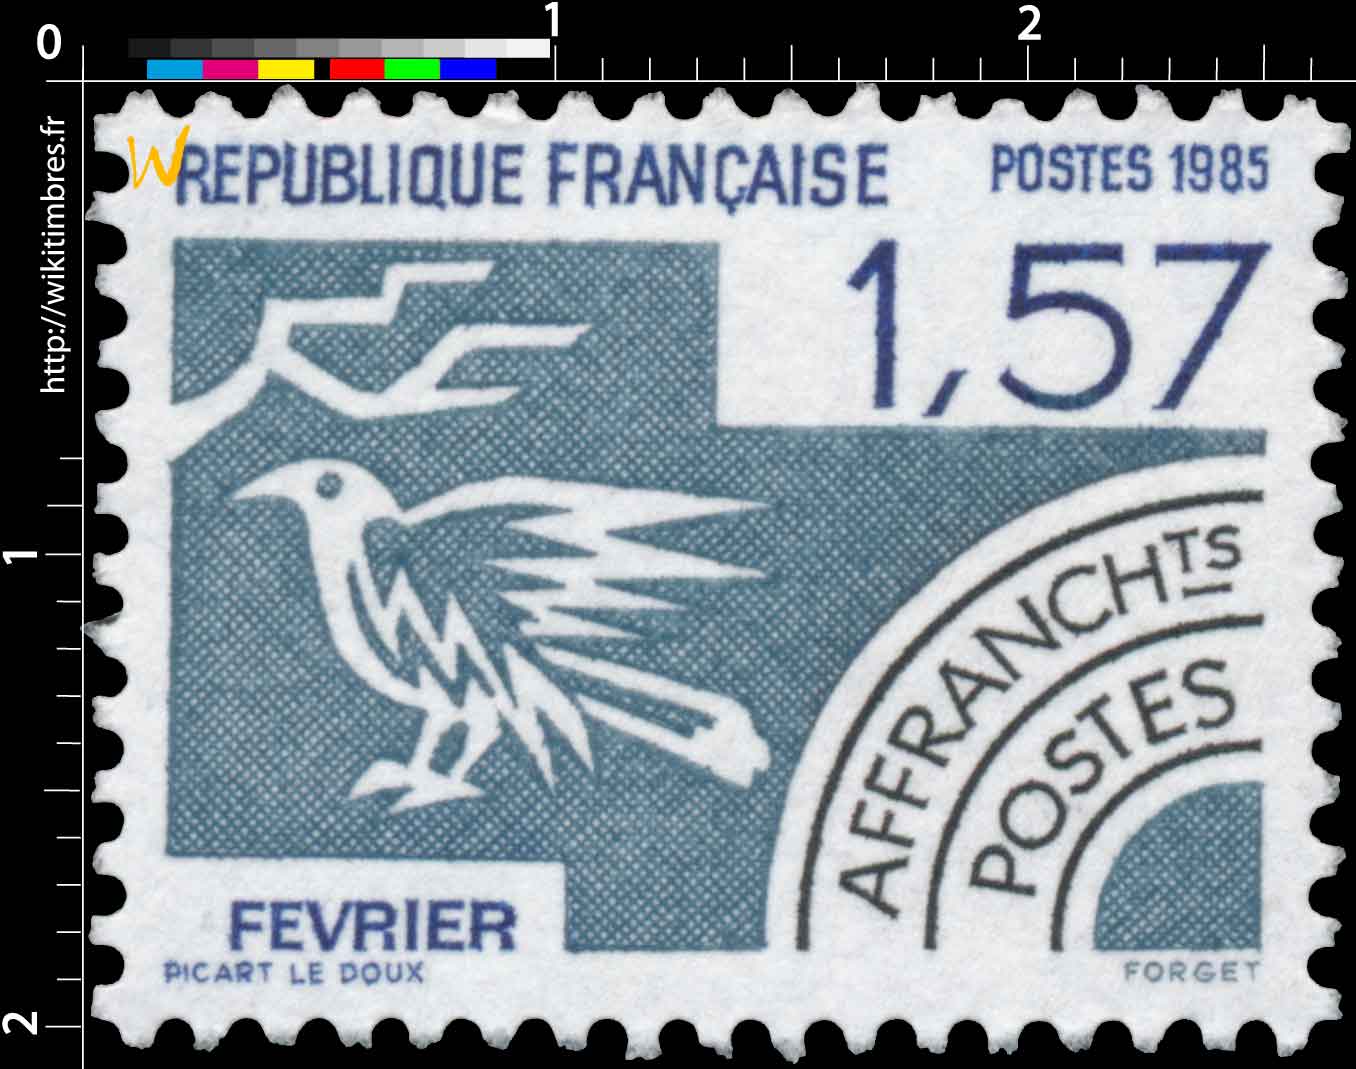 1985 FÉVRIER